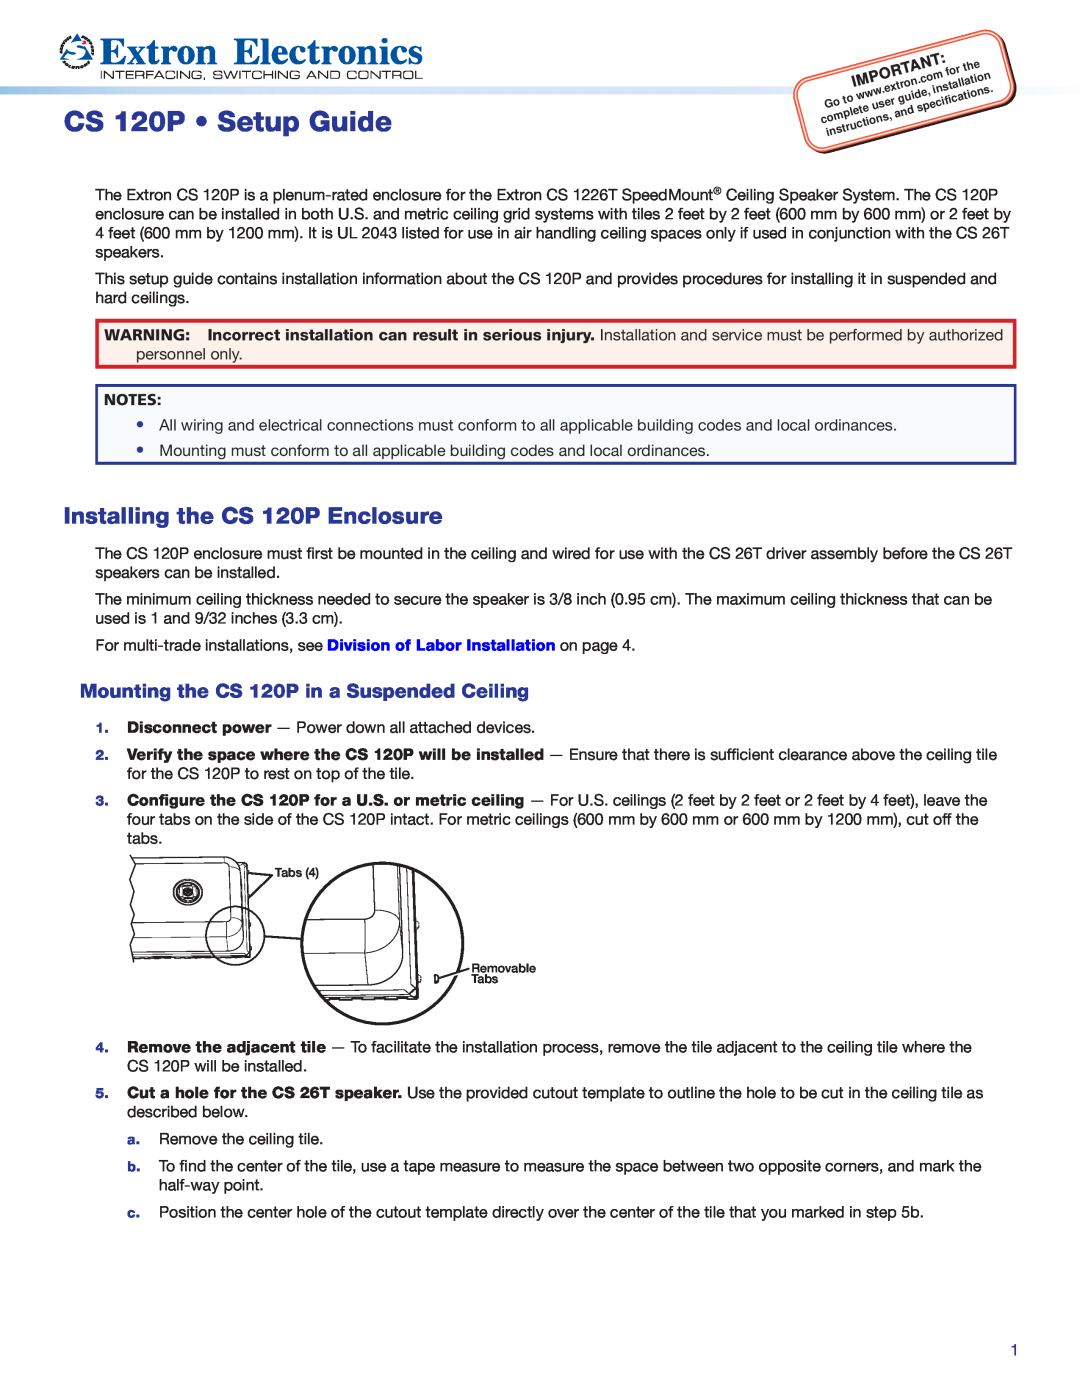 Extron electronic manual CS 26T and CS 120P, User Guide, Speakers, CS 1226T SpeedMount Ceiling Speaker System 